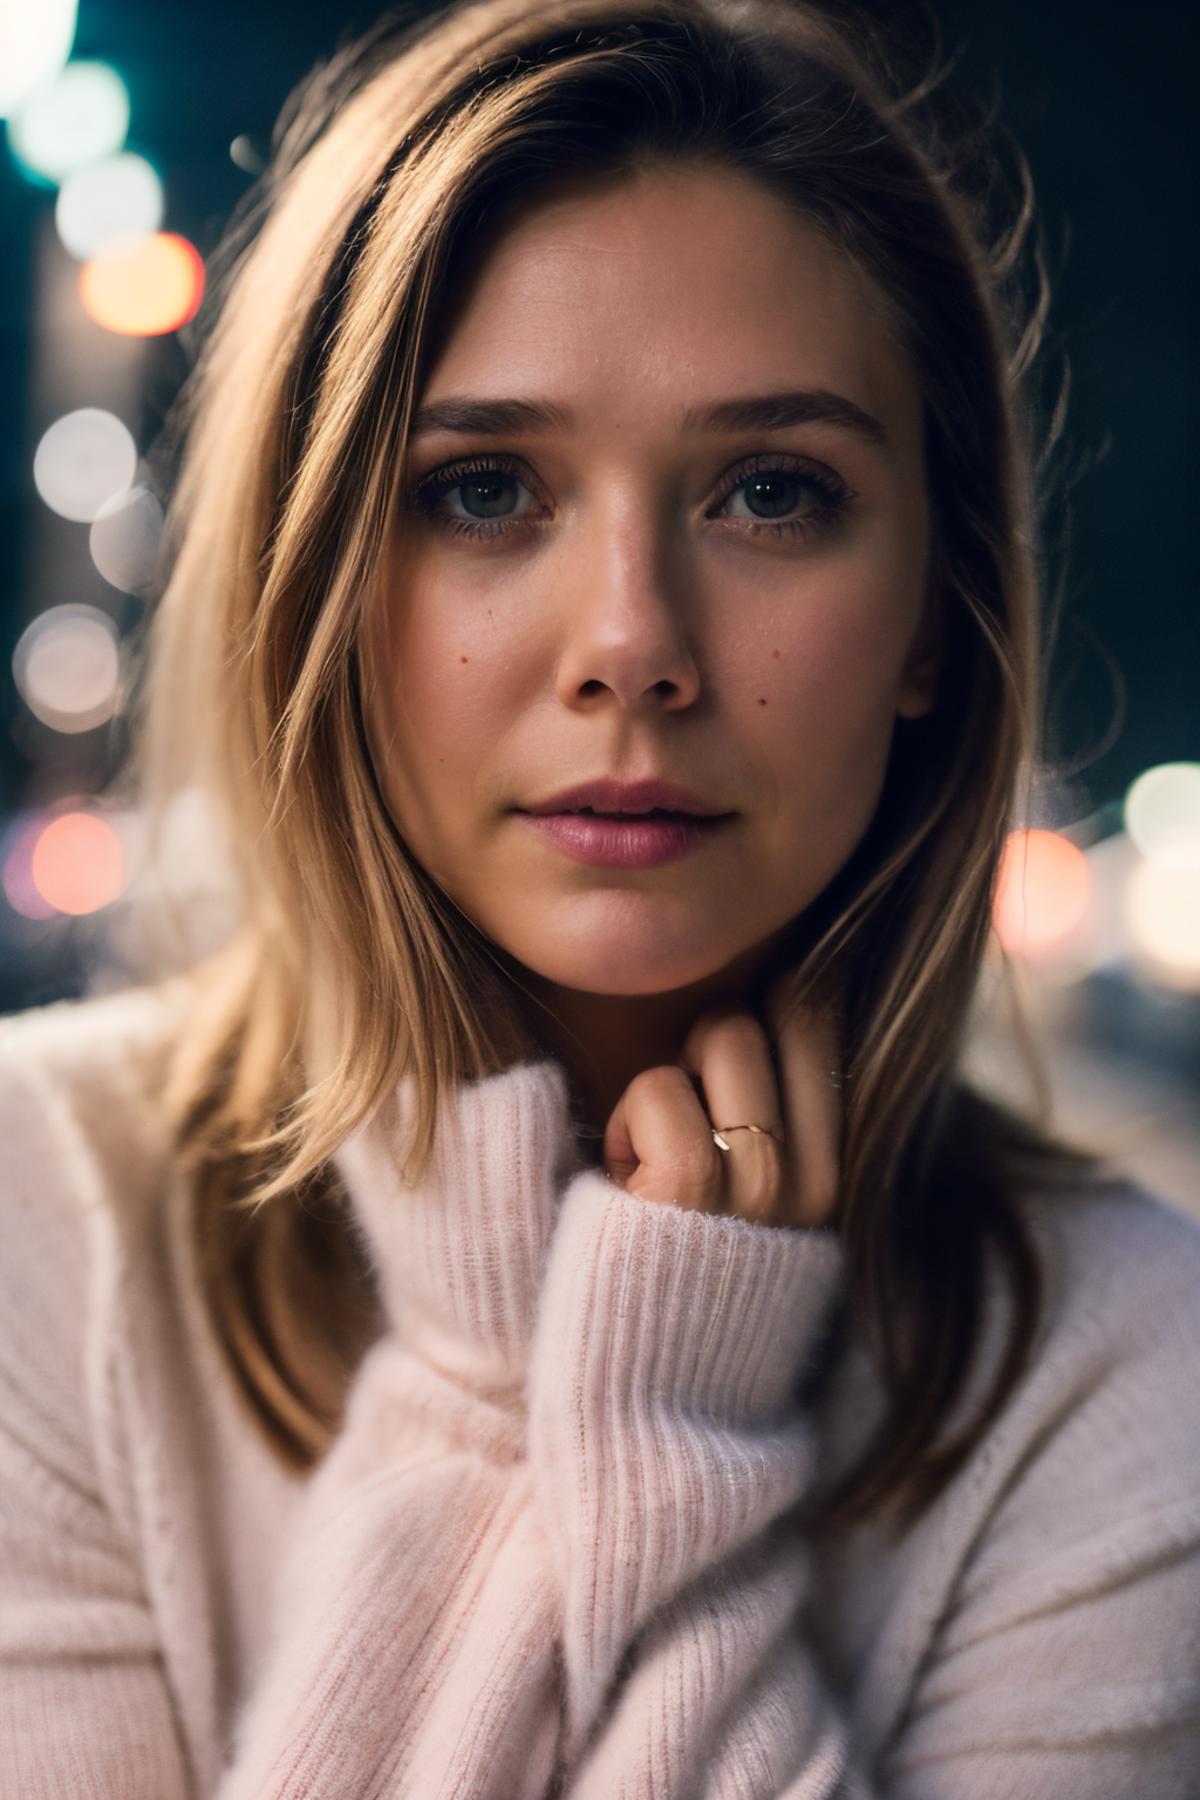 Elizabeth Olsen image by damocles_aaa